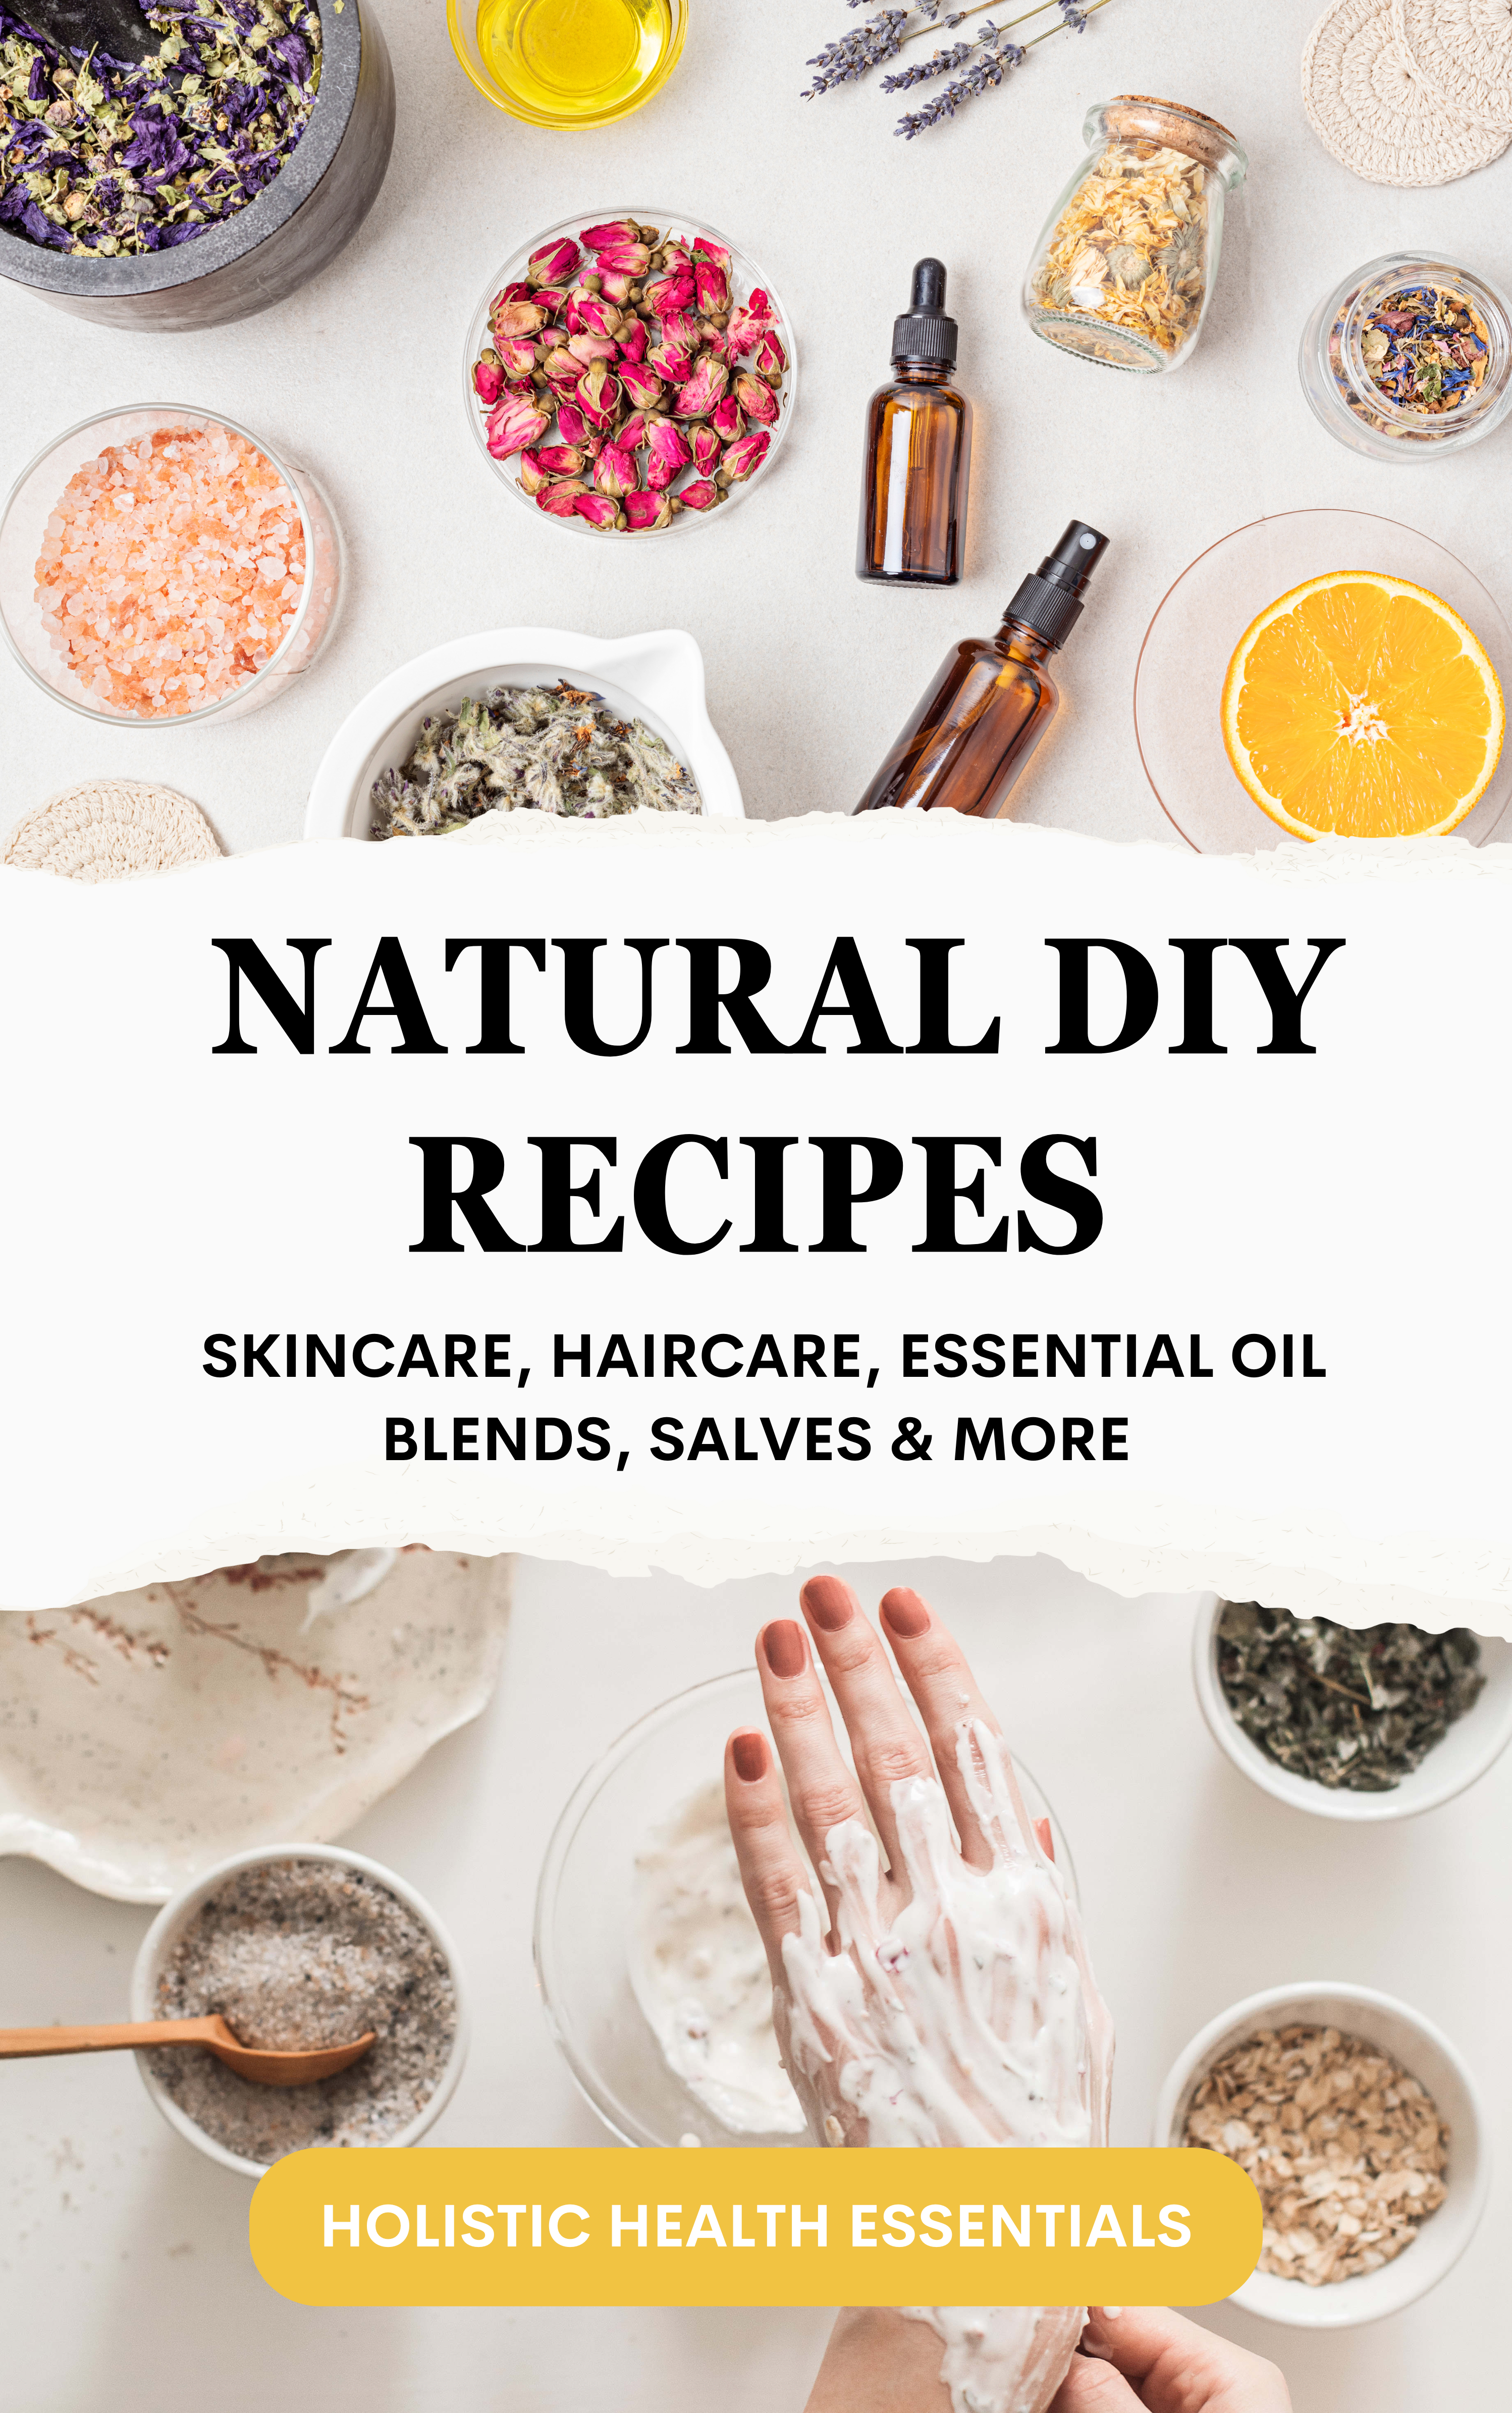 Natural DIY Recipes: Skincare, Haircare & More